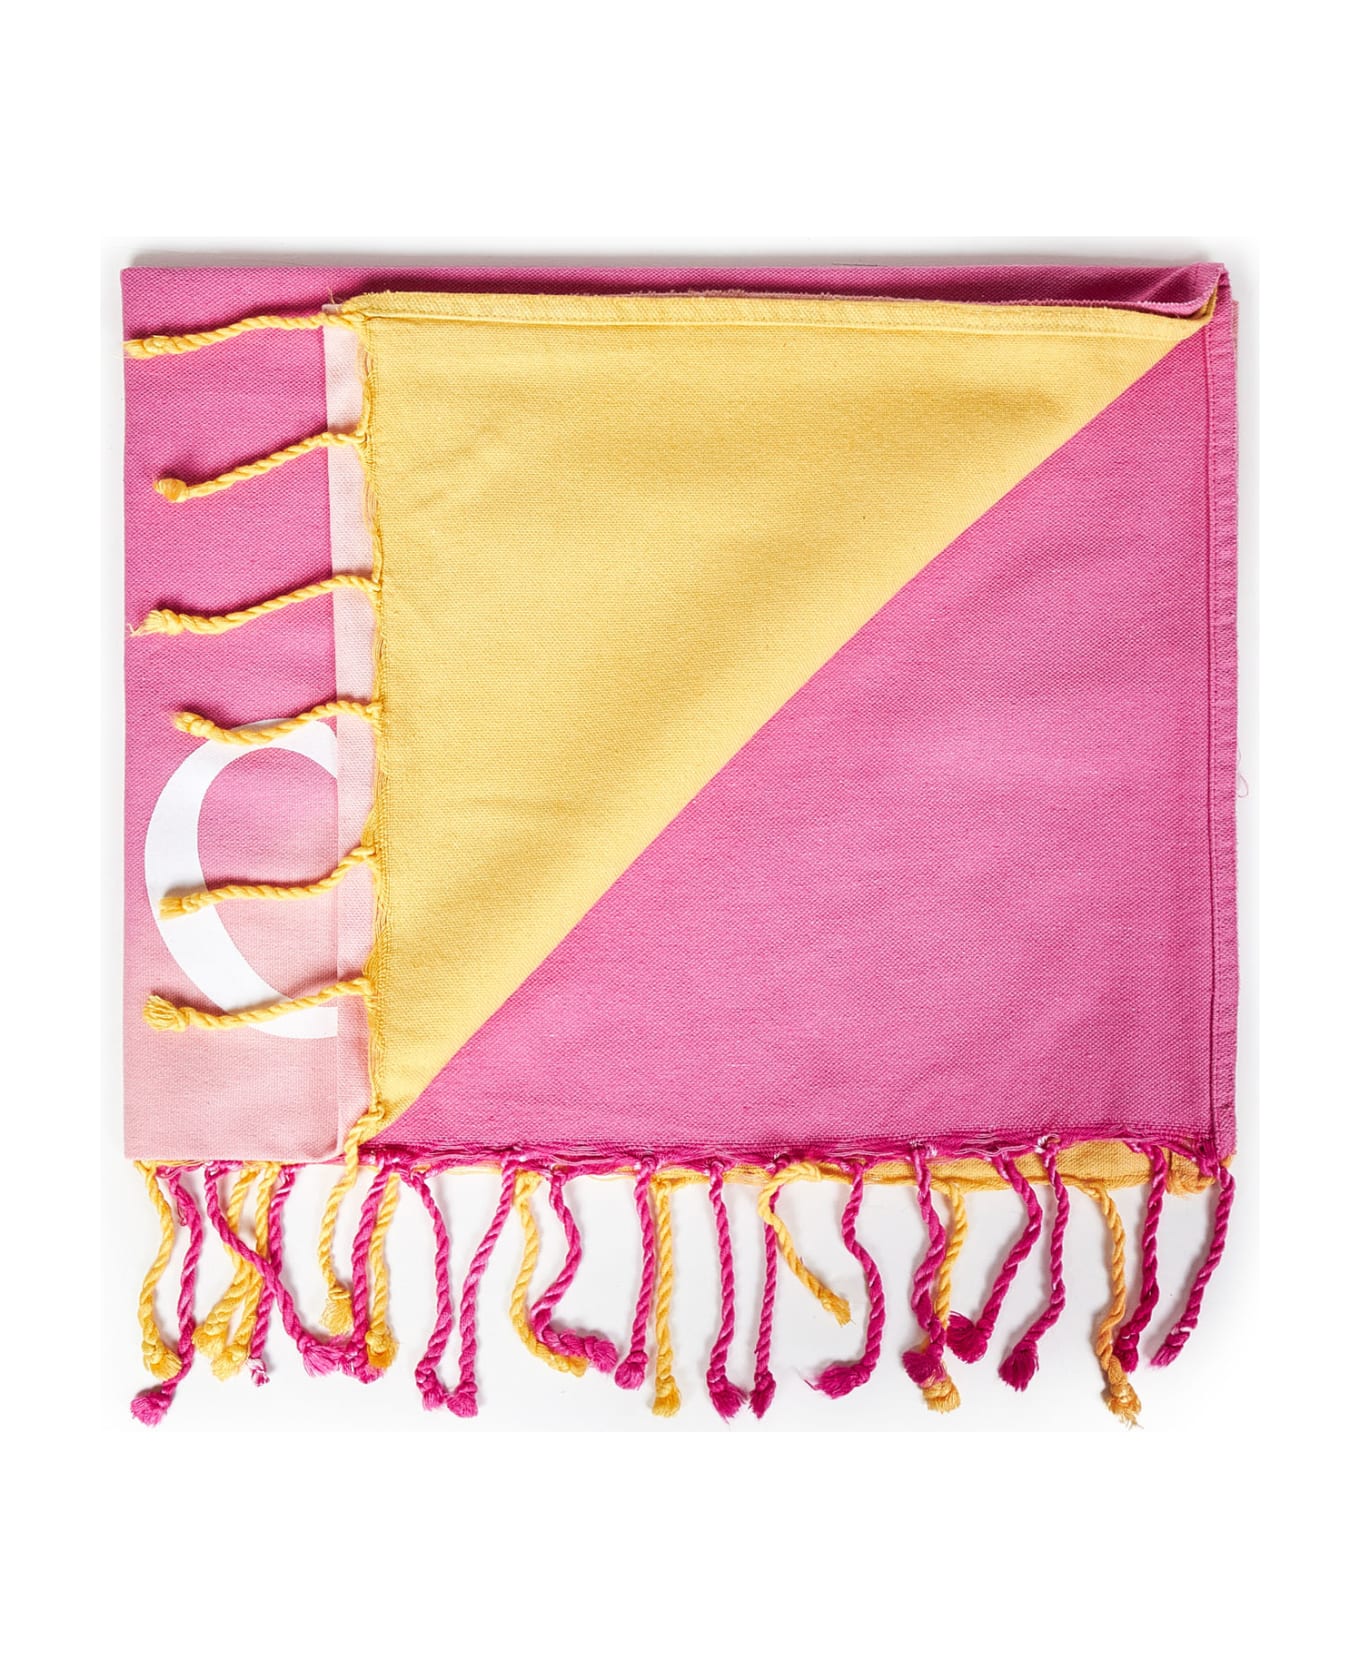 Chloé Kids Towel - Pink